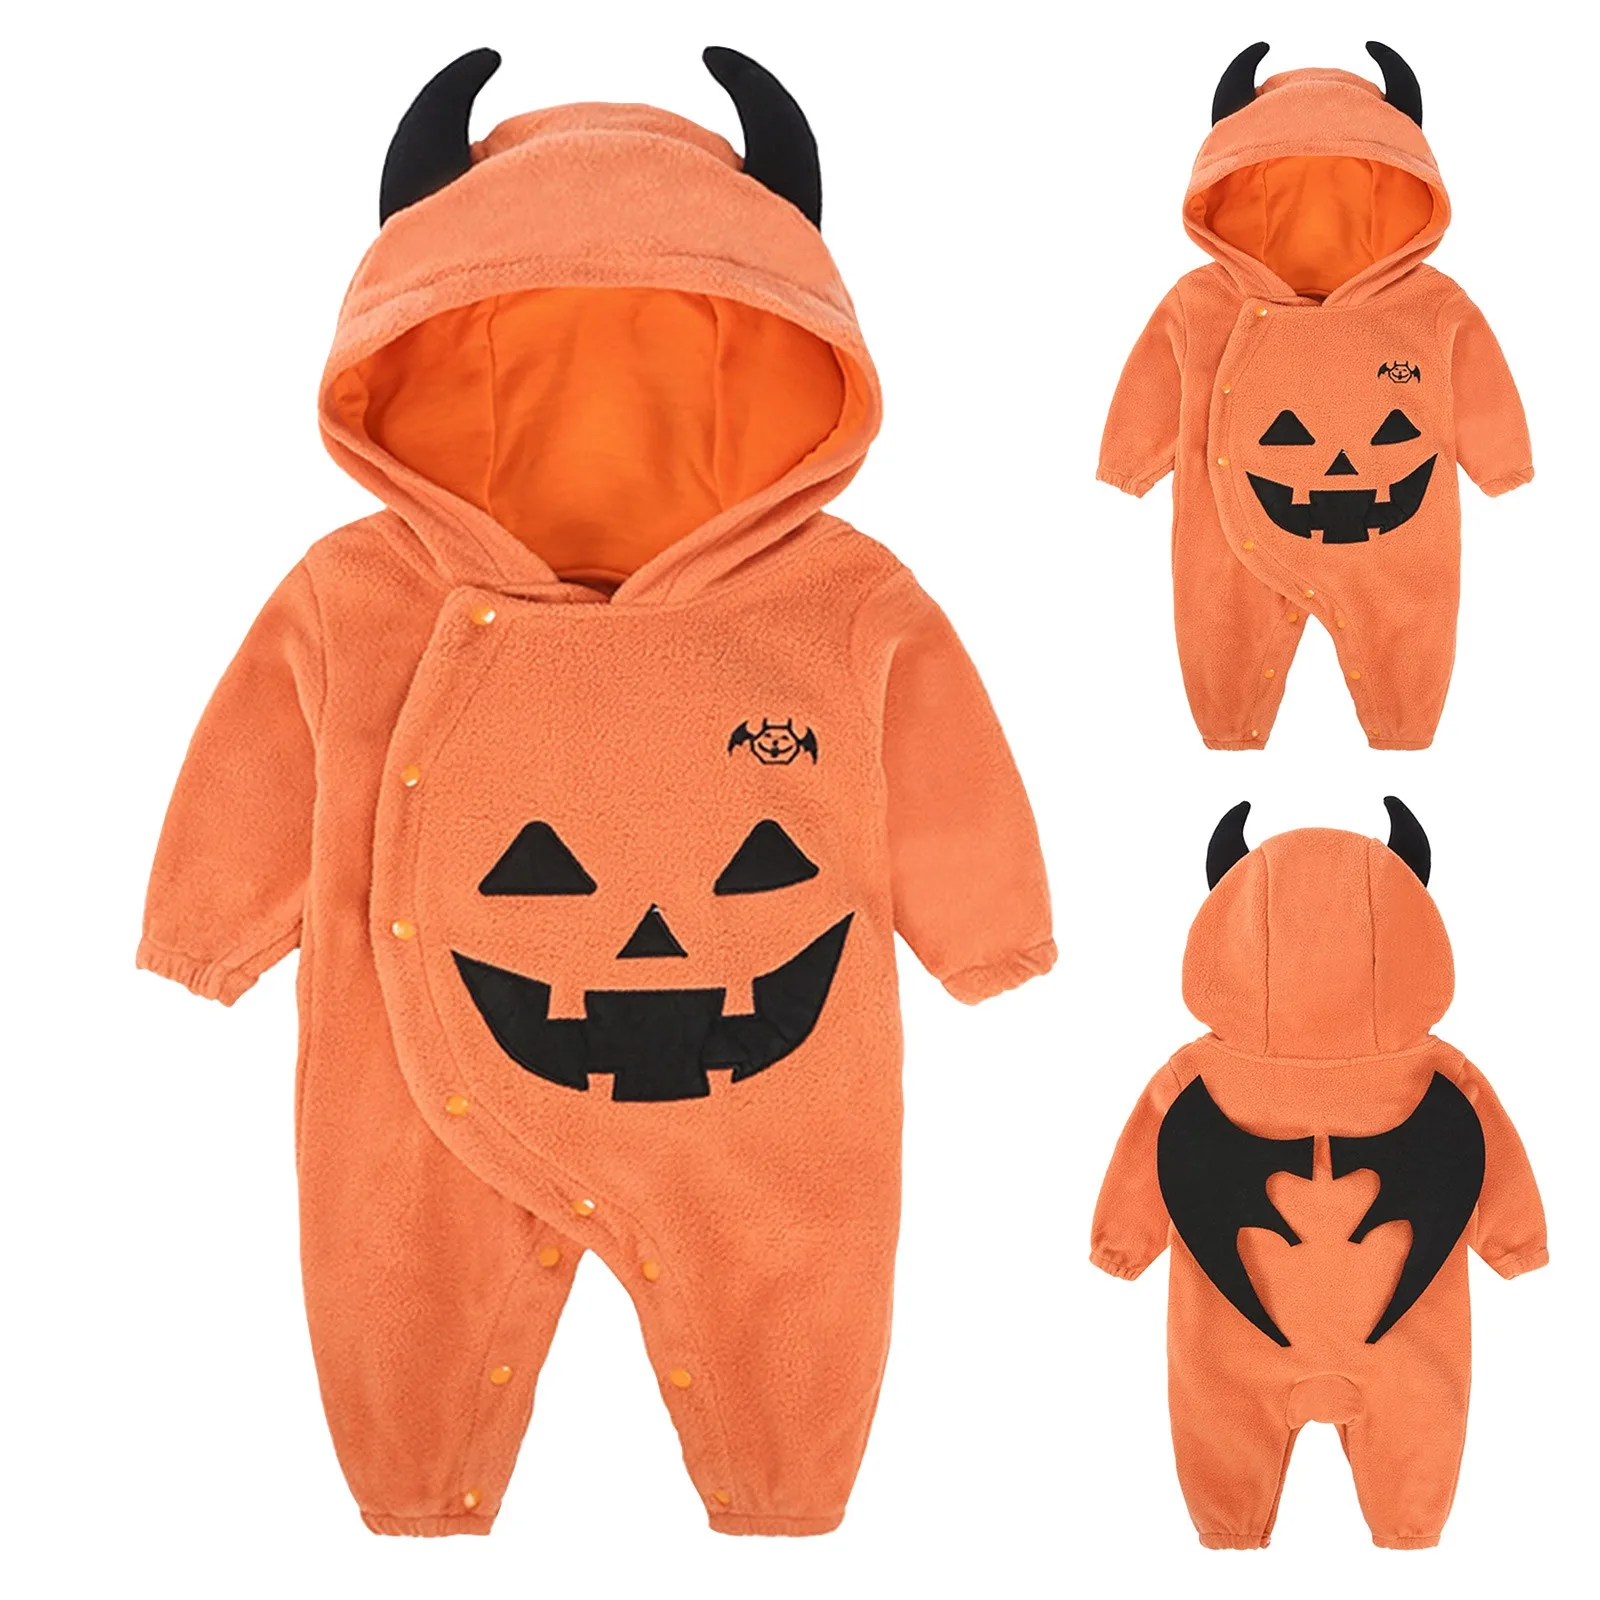 Fleece Baby Jumpsuit Hooded Baby Halloween Costume Toddler Clothes Orange Cosplay Infant Rompers Kids Onesie